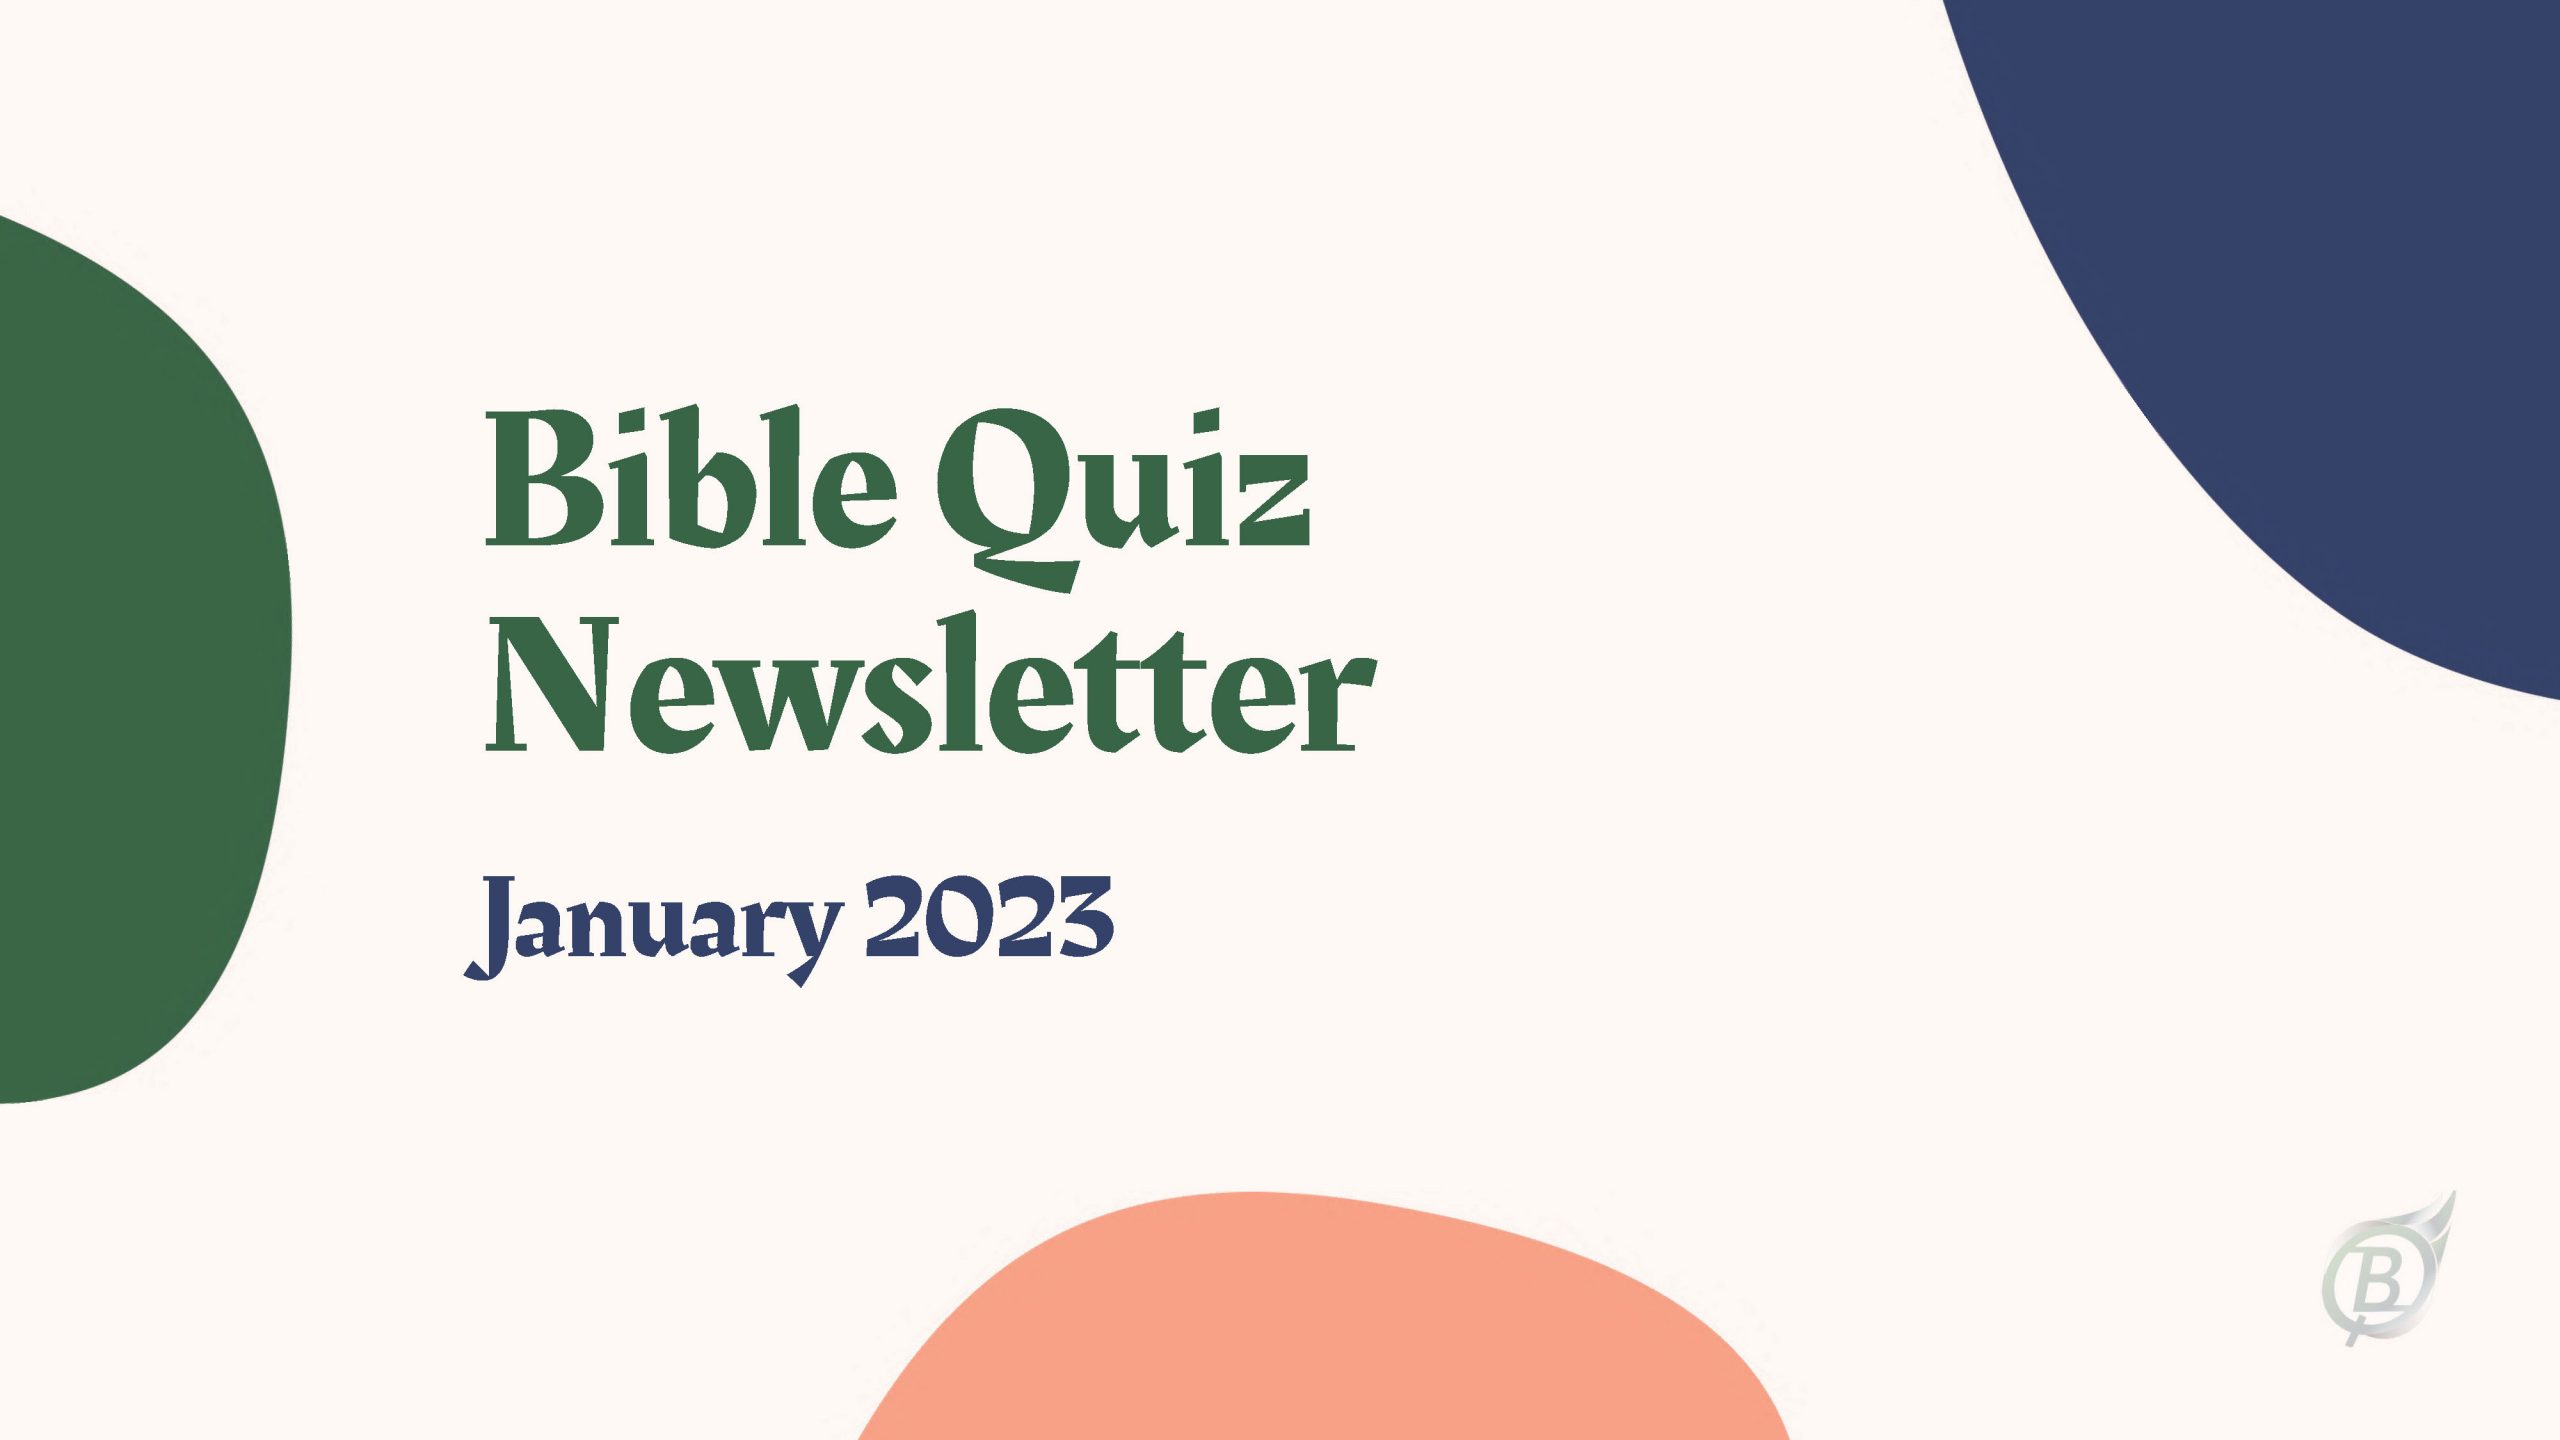 Bible Quiz Newsletter - January 2023